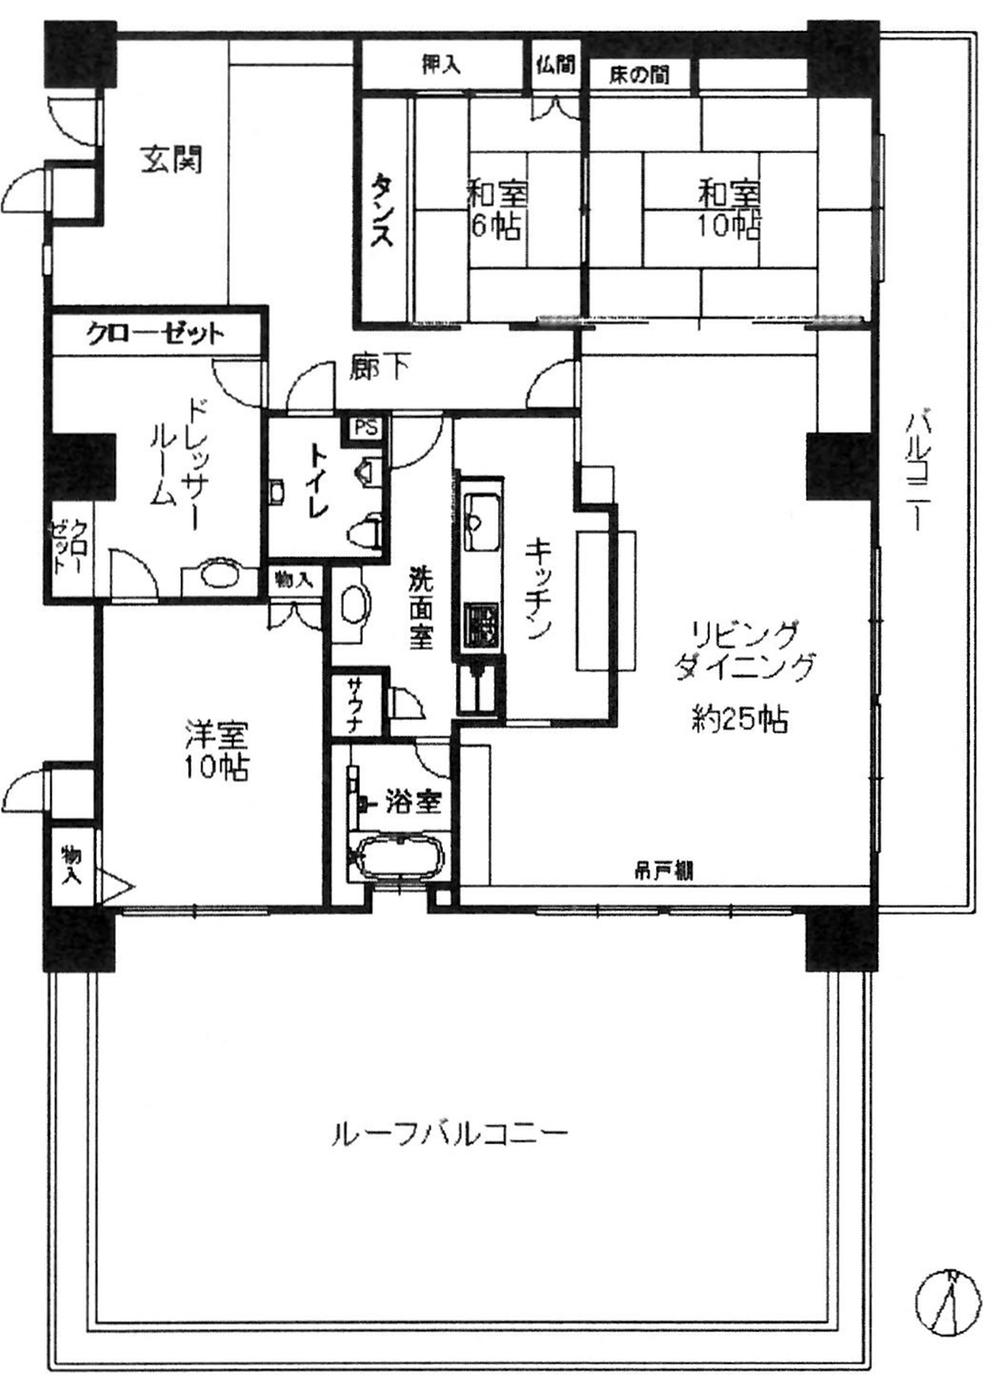 Floor plan. 3LDK + S (storeroom), Price 39,800,000 yen, Footprint 162.69 sq m , Balcony area 20.2 sq m current state priority